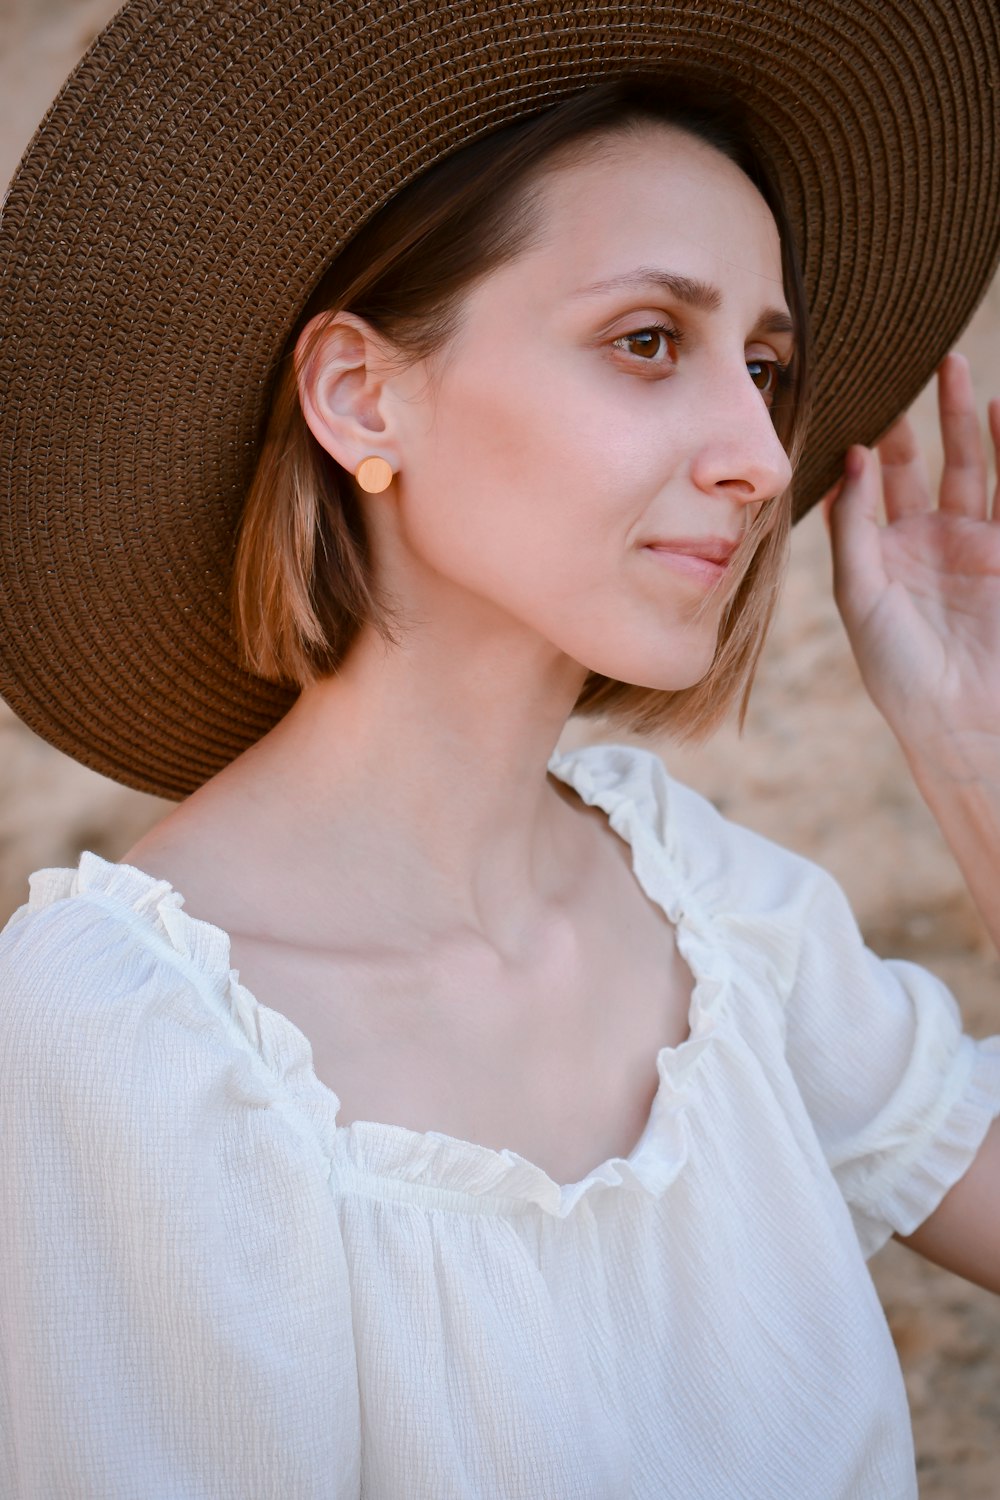 woman in white long sleeve shirt wearing brown hat